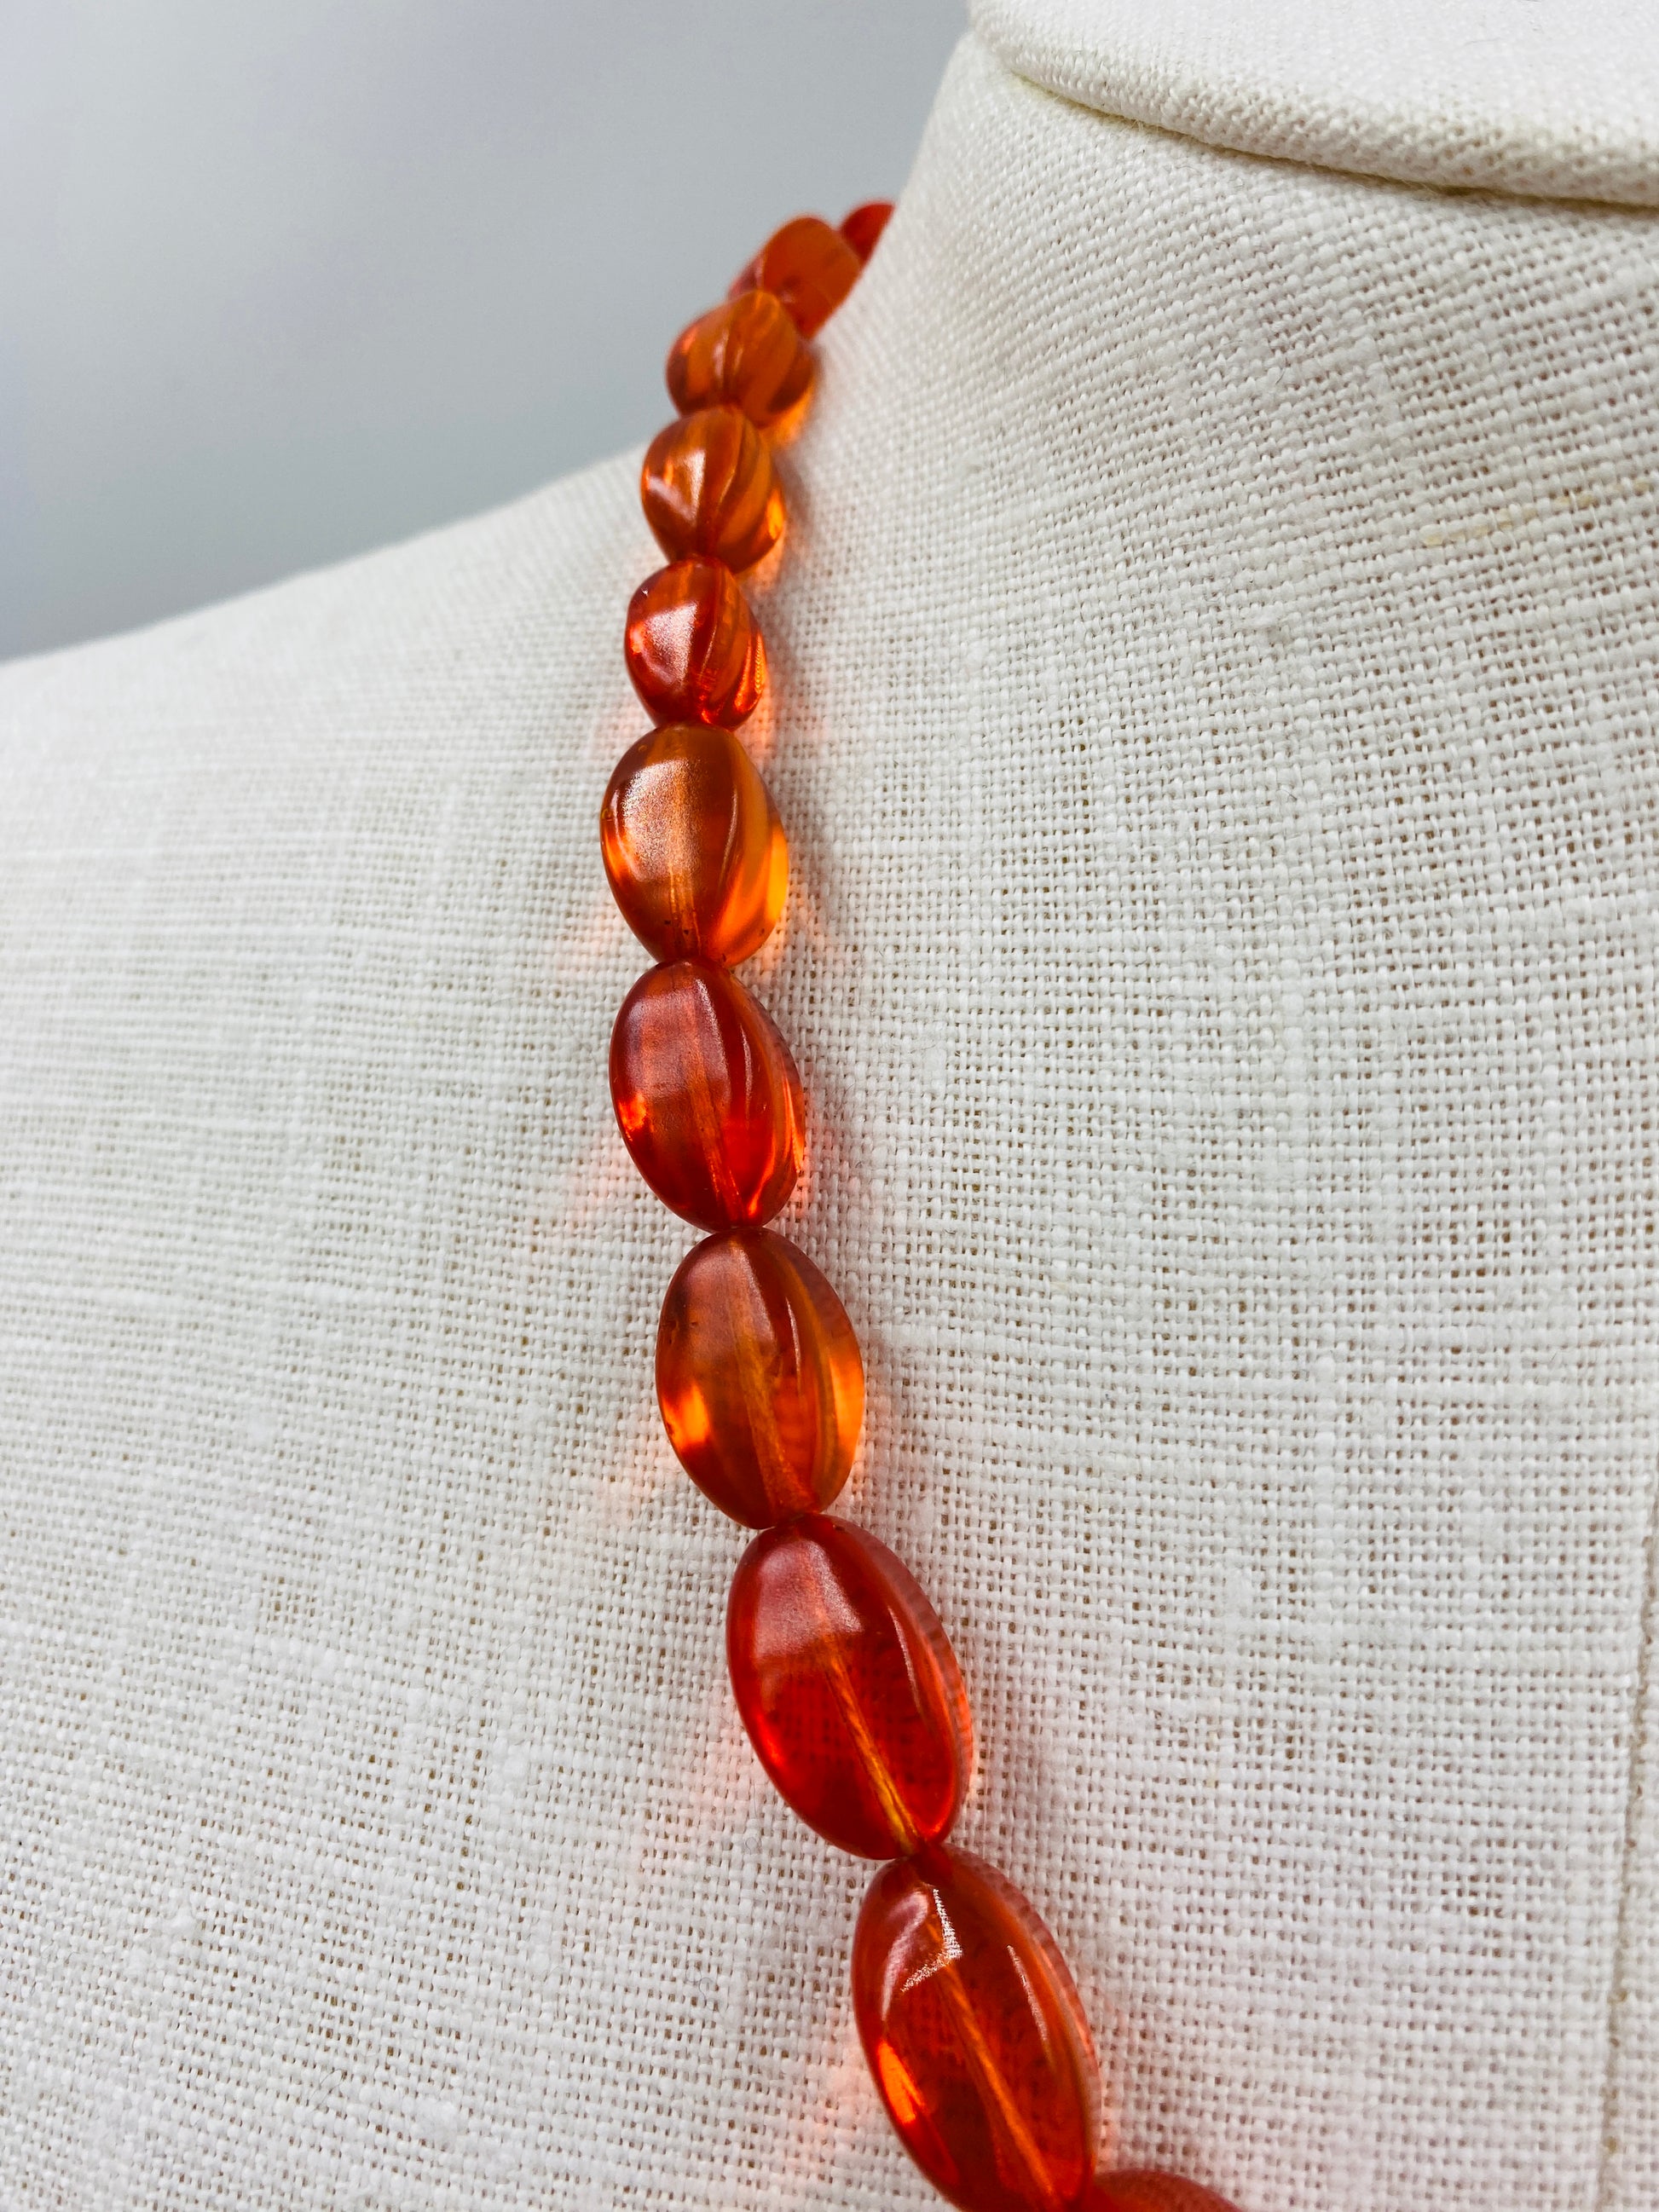 Vintage 1930s Orange Glass Bead Necklace